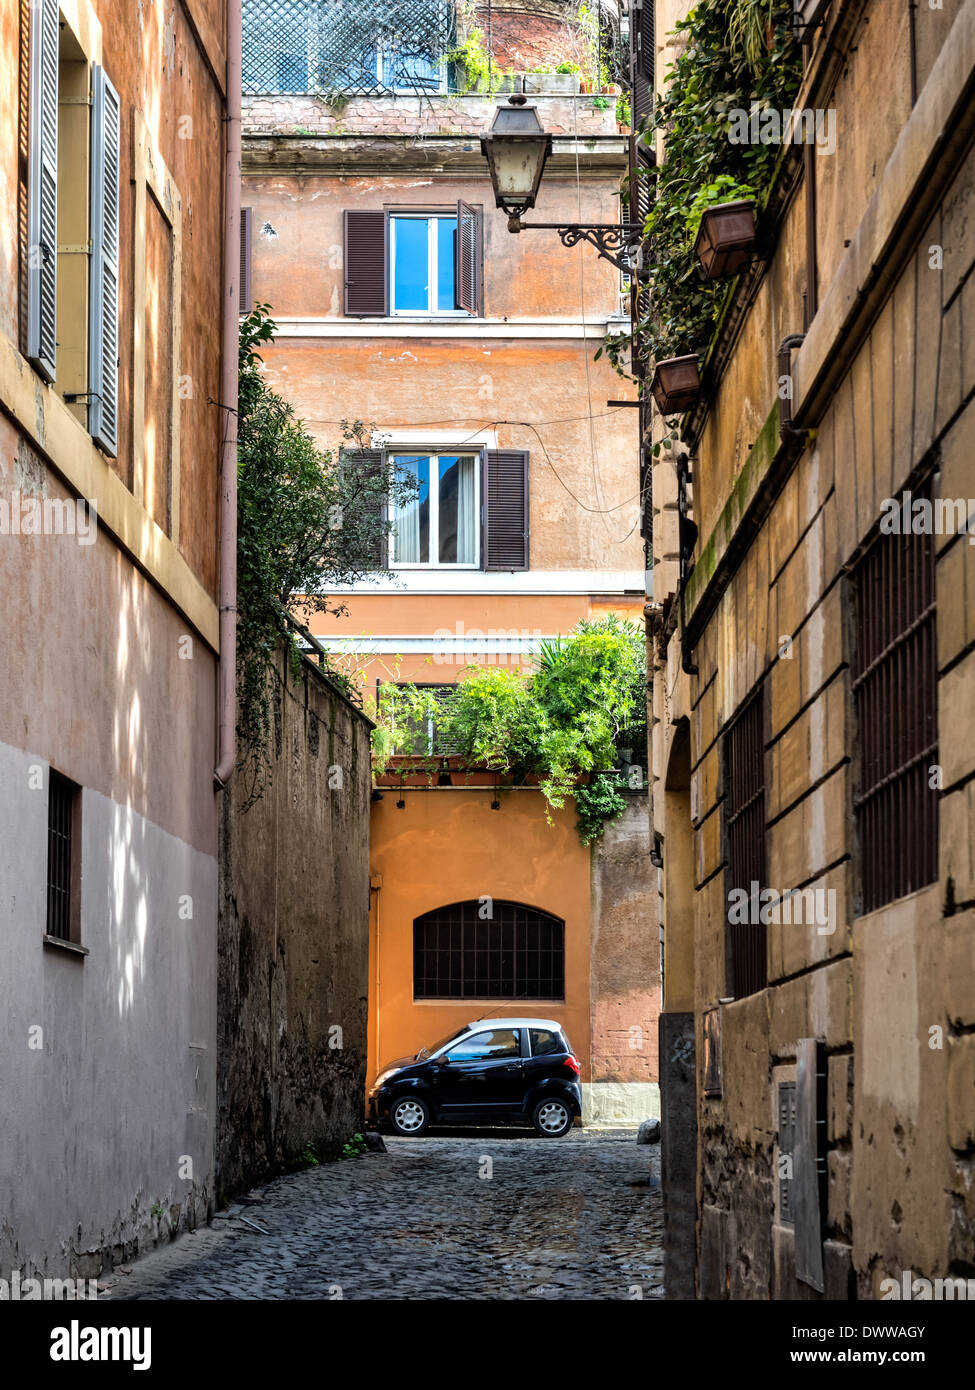 Street scene from Trastevere district of Rome, Italy Stock Photo